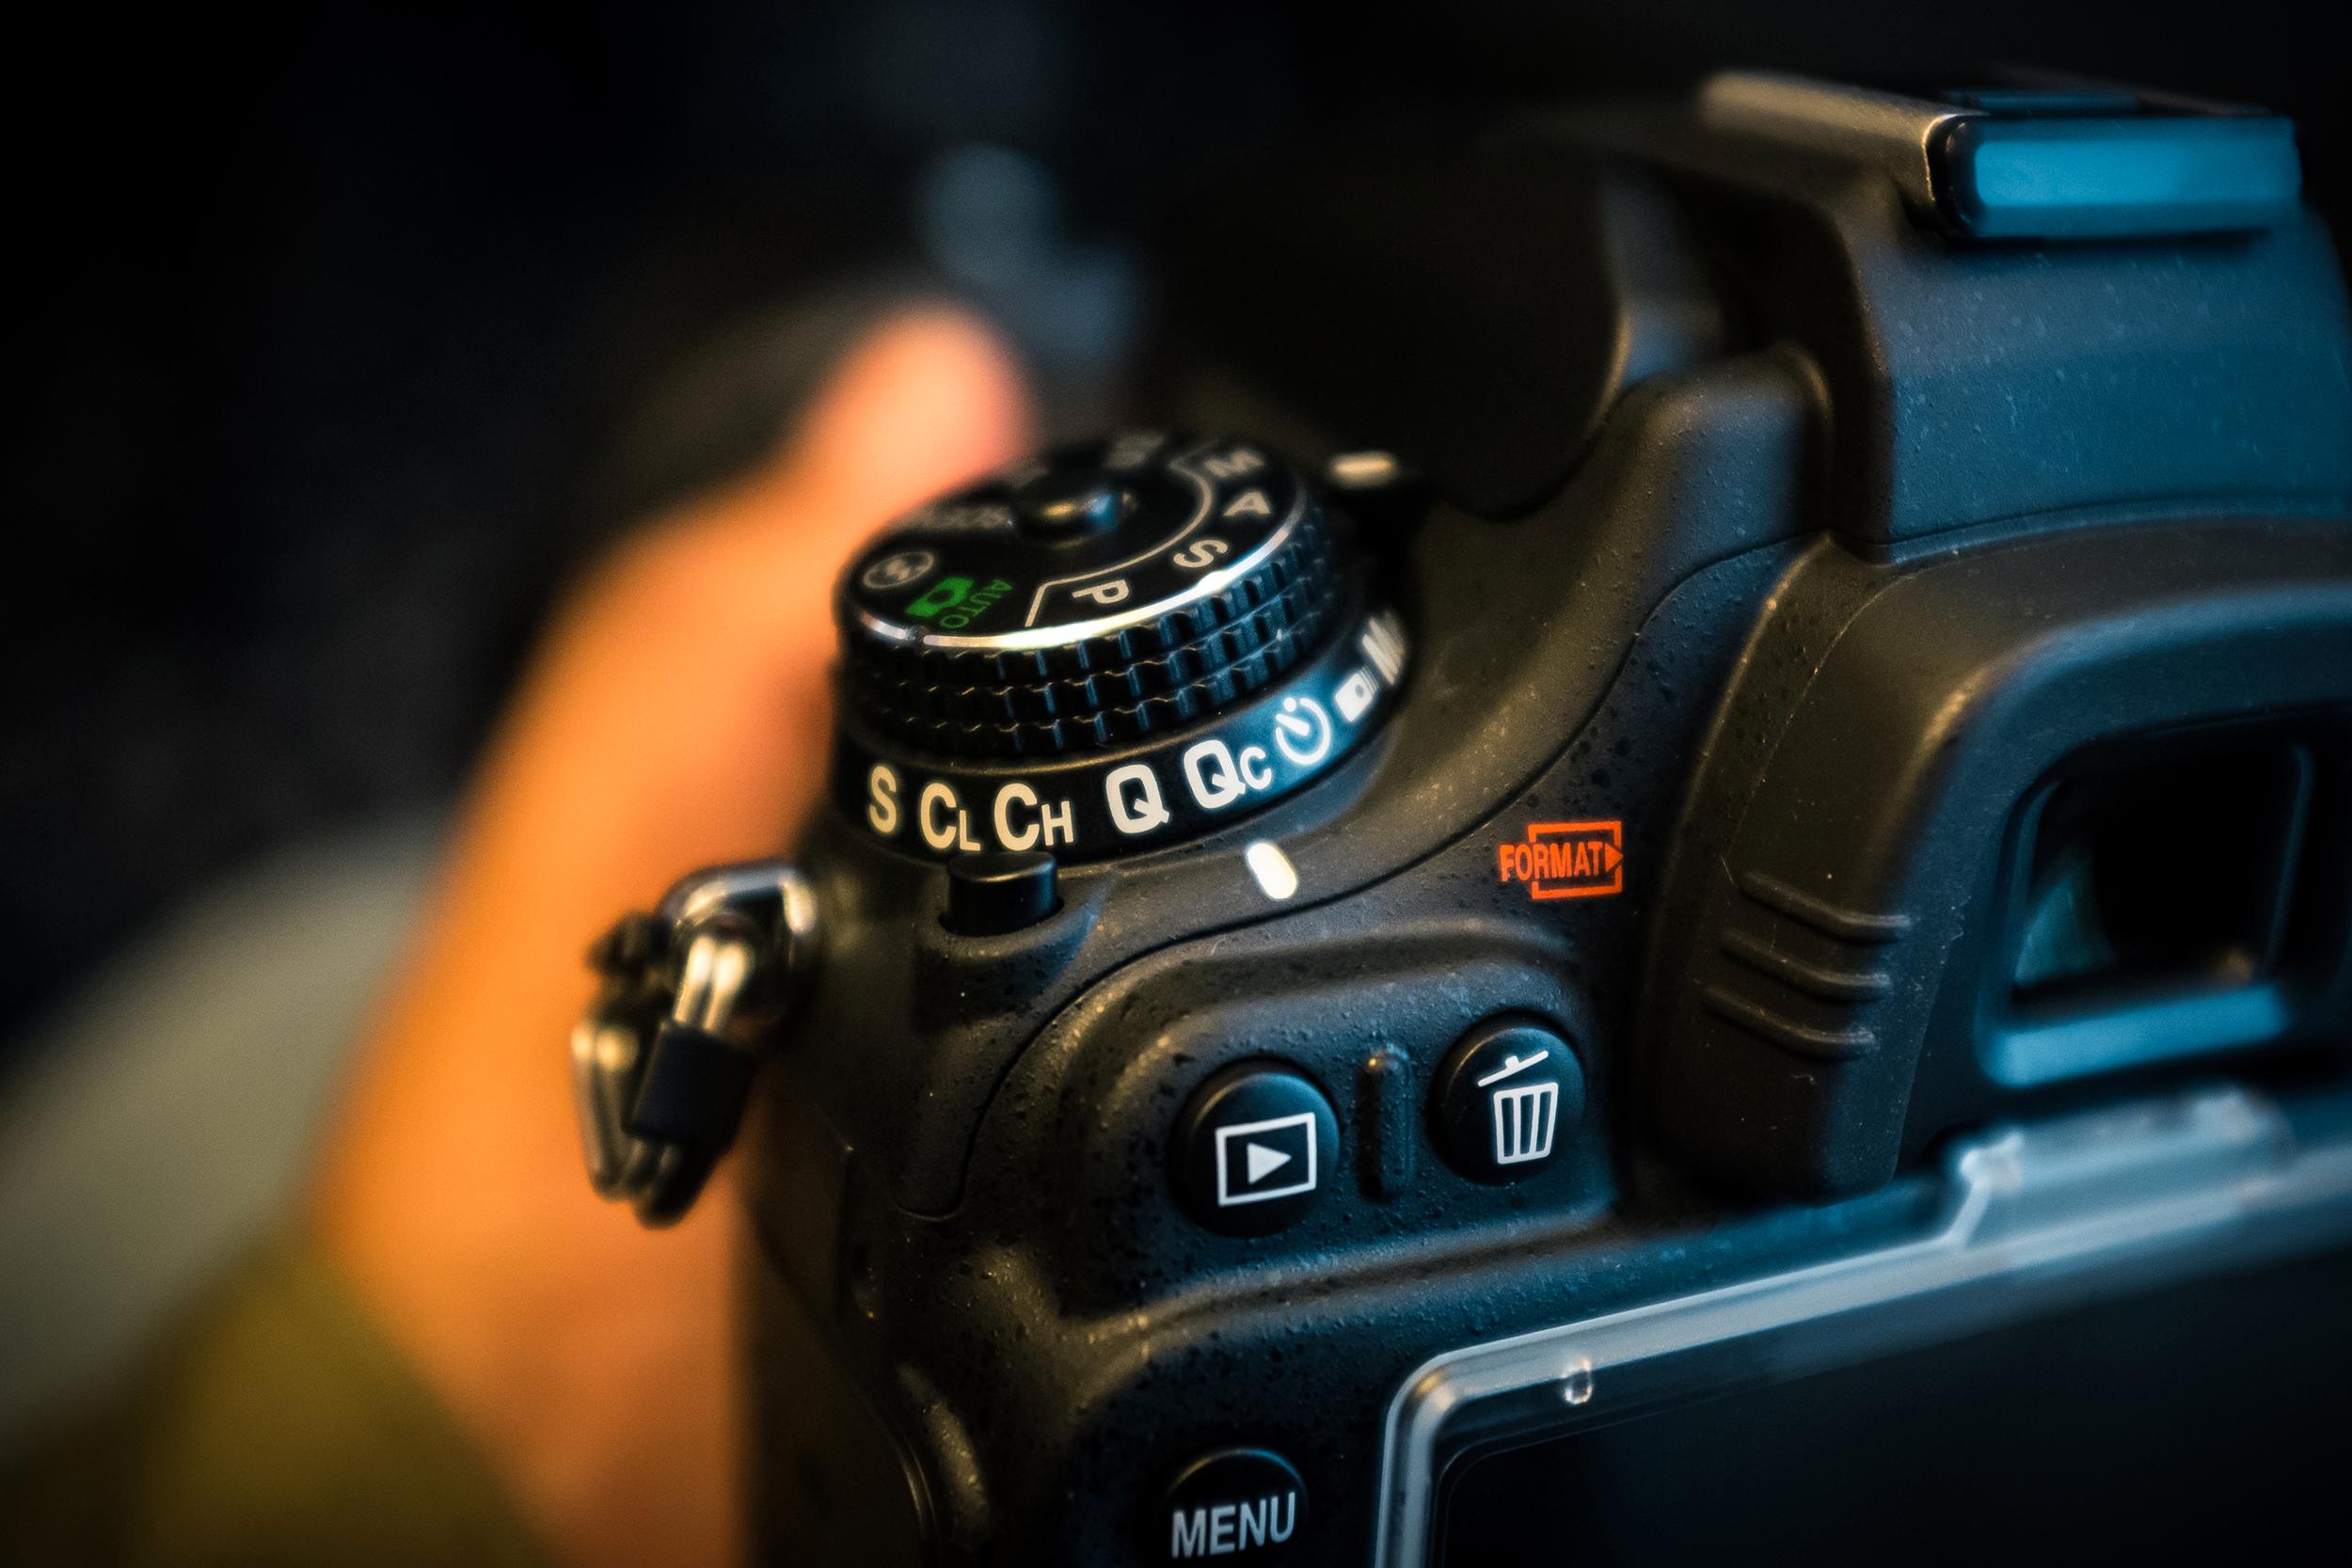 Nikon D610s nye stillemodus heter Qc.
Foto: Johannes Granseth